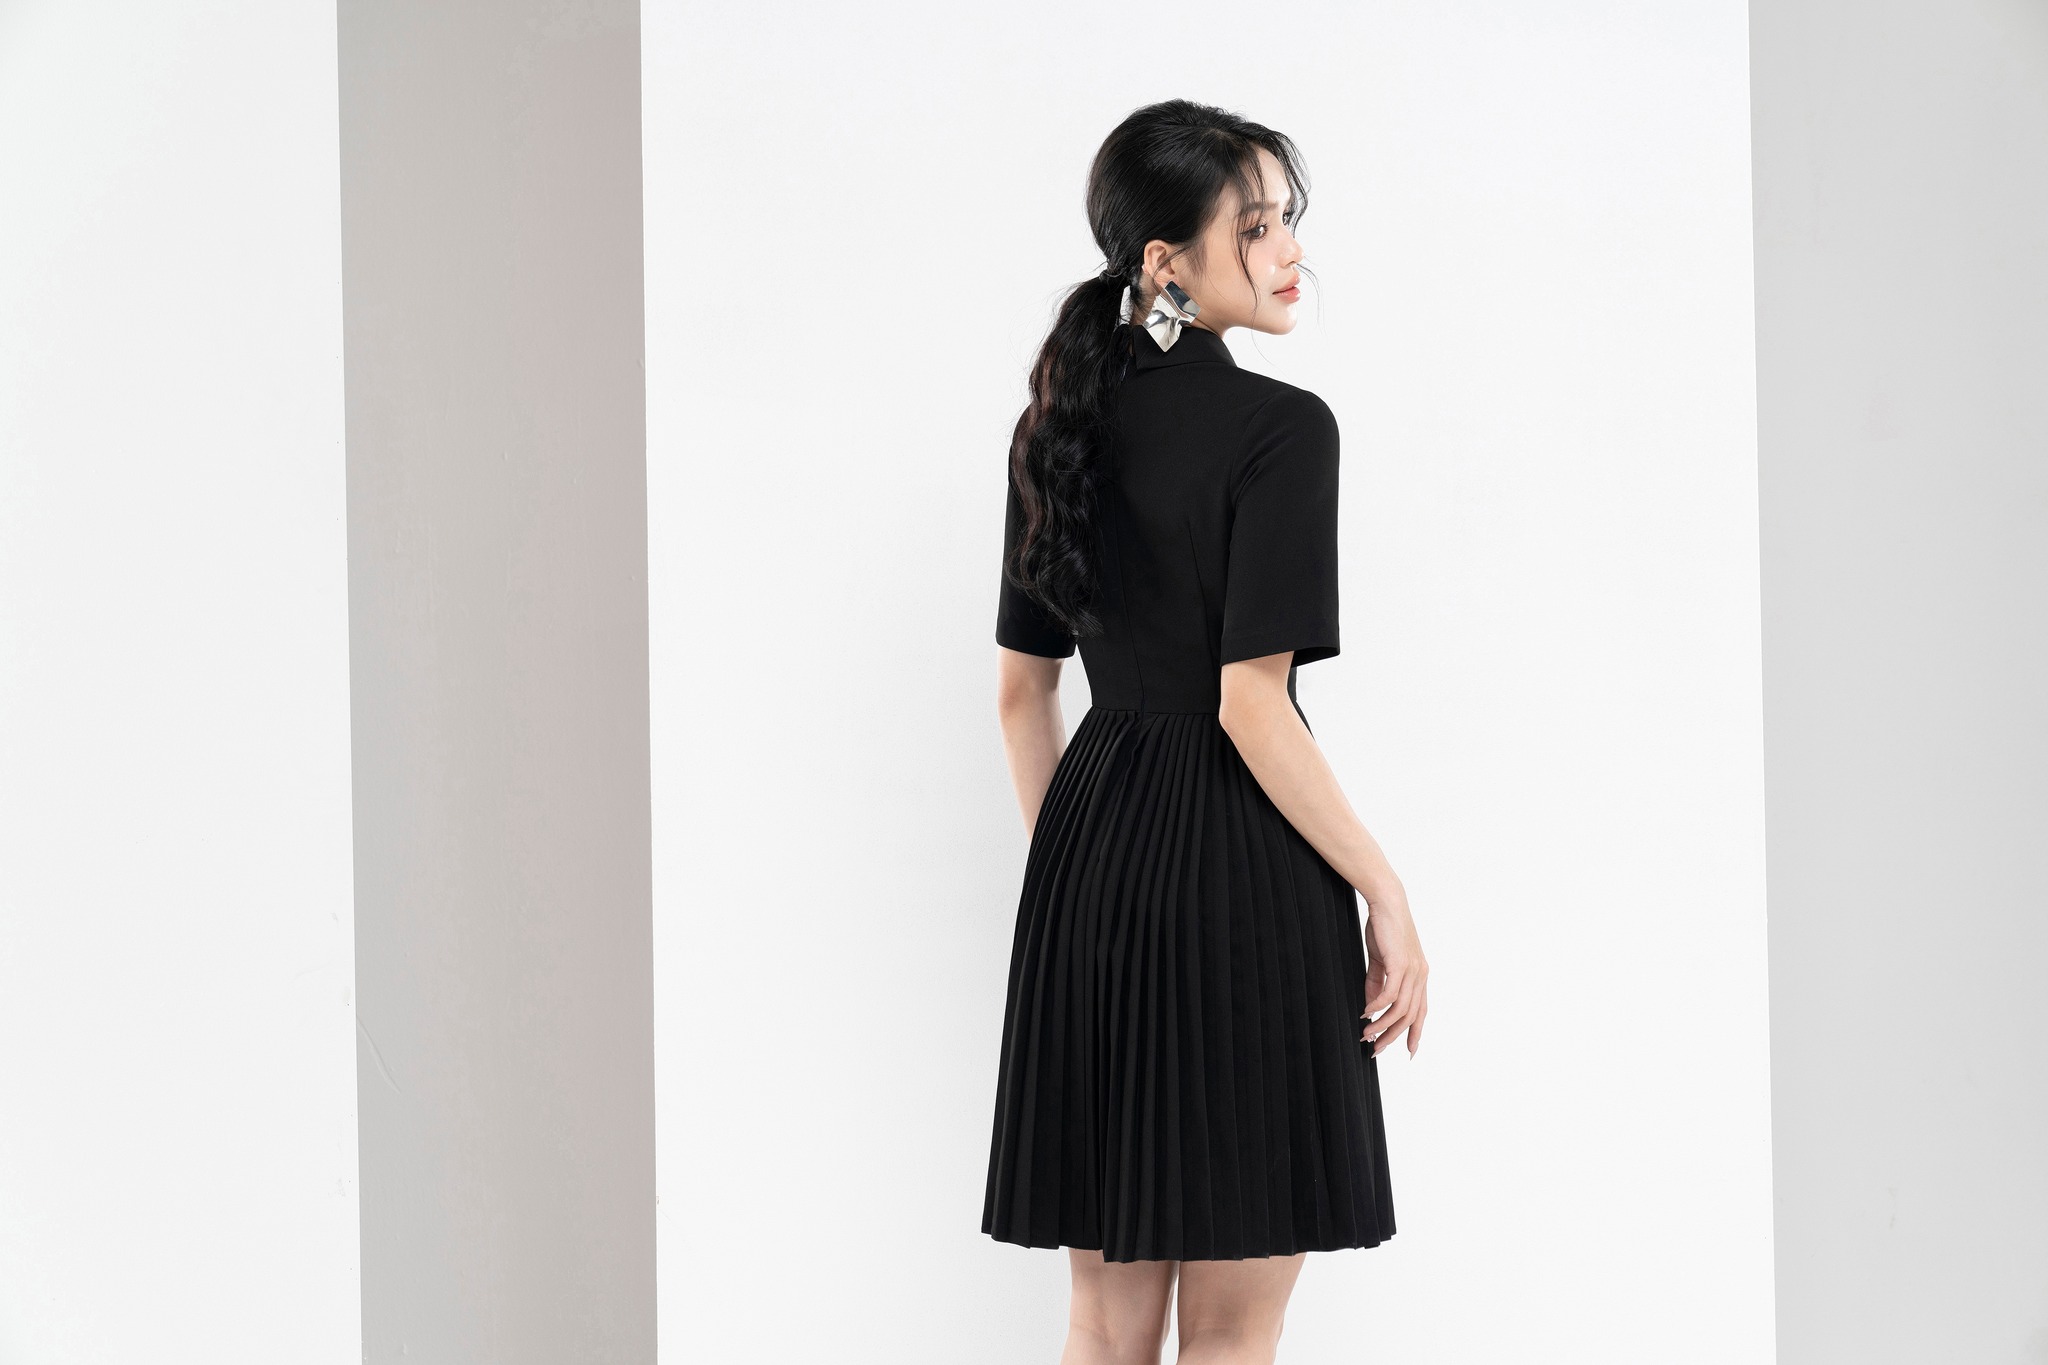 Đầm Sana Dress đen xếp ly chân phối cổ sơ mi LUXD019